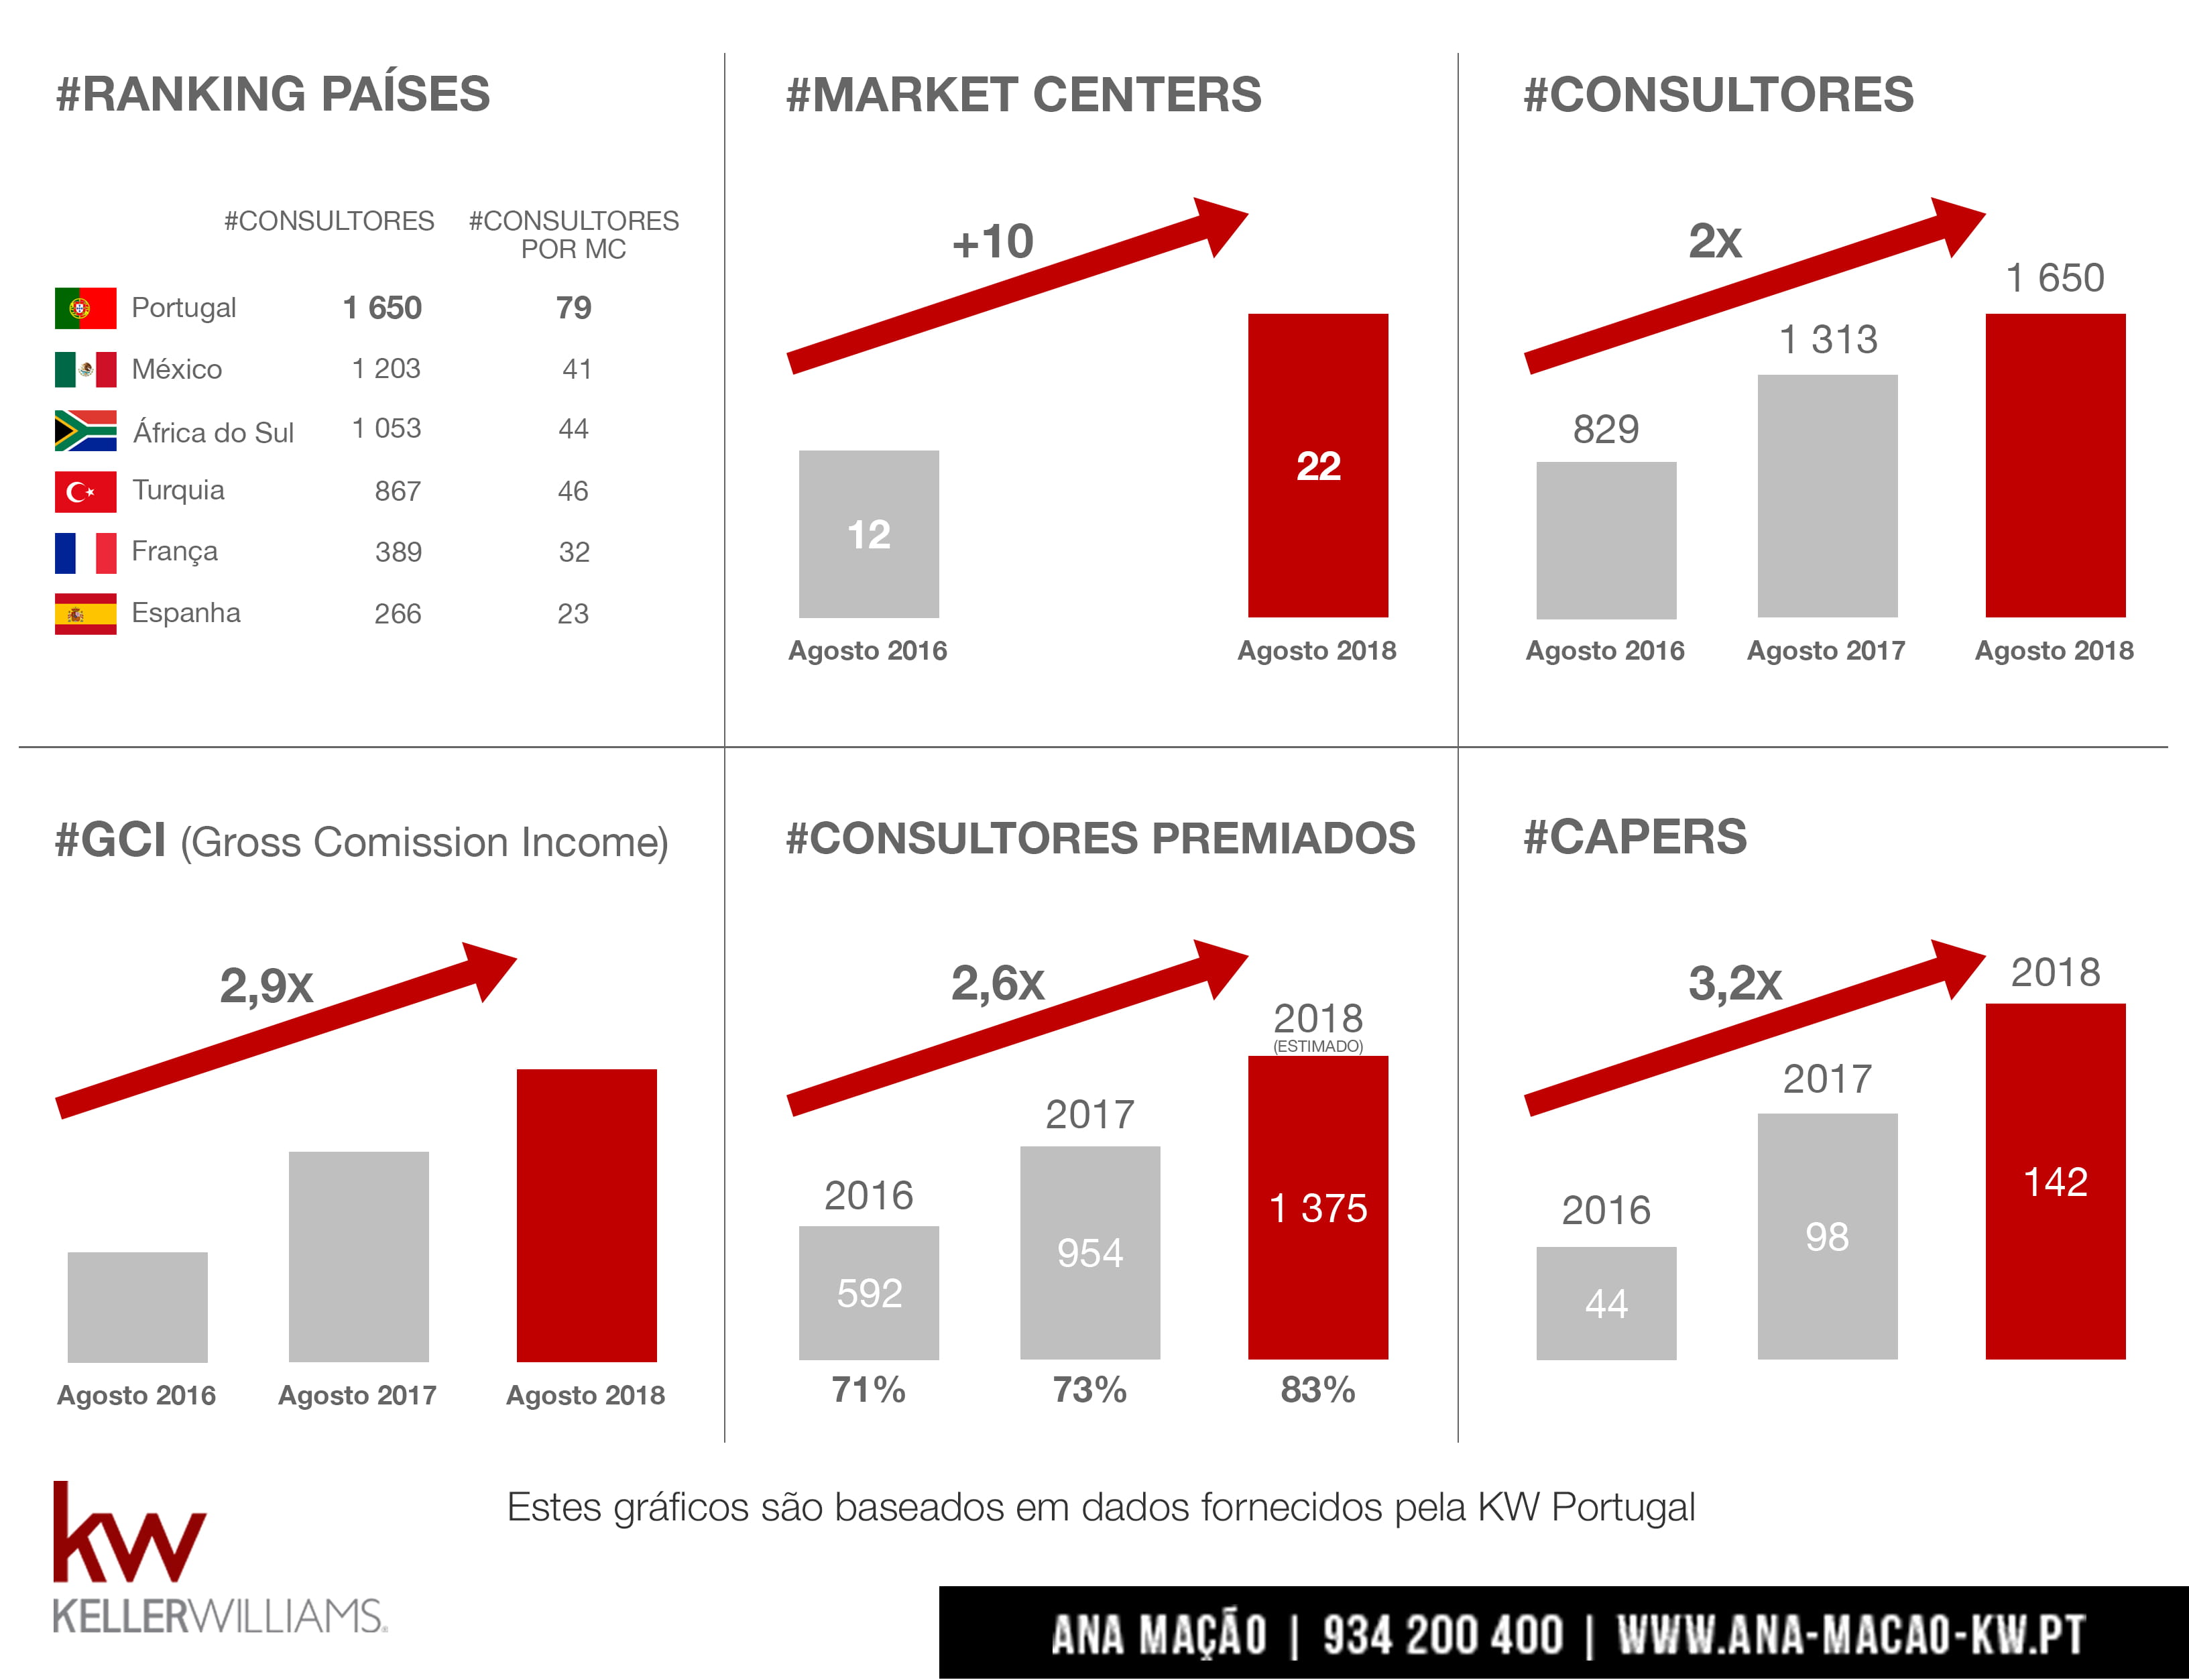 Keller Williams Portugal growth charts - 2016, 2017, 2018